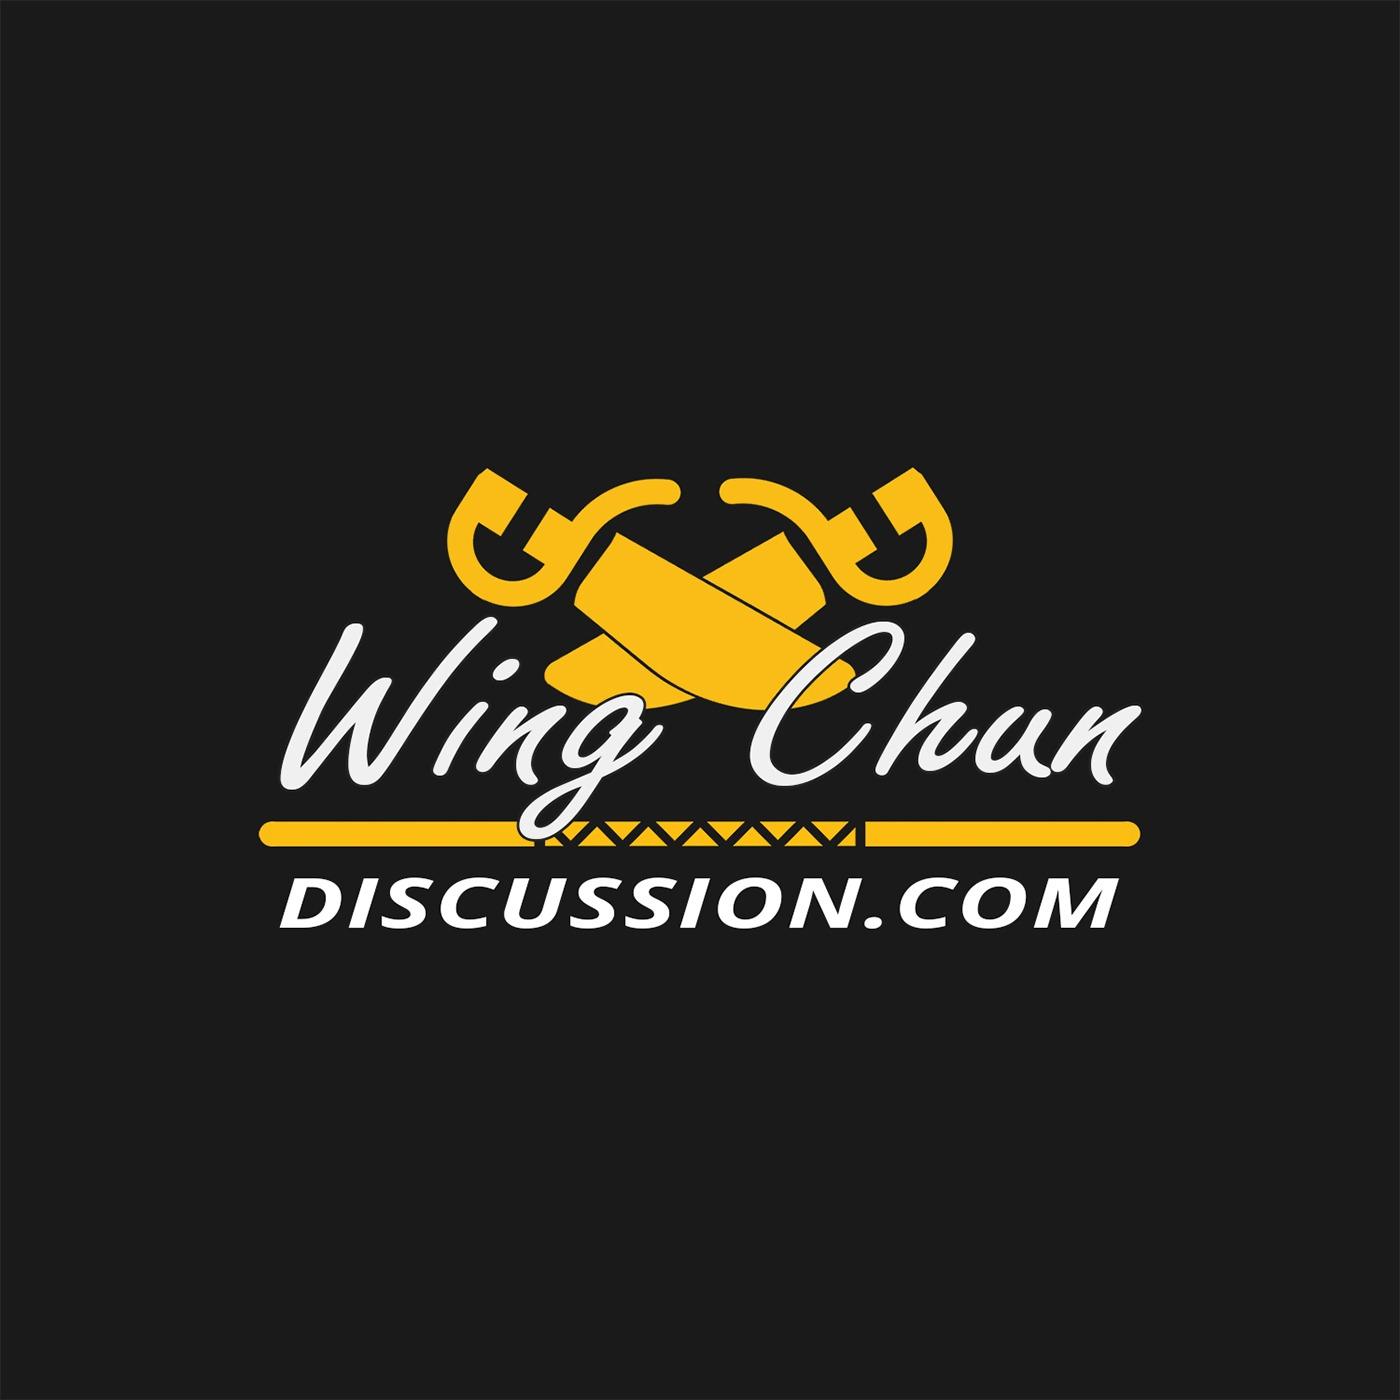 Wing Chun Discussion